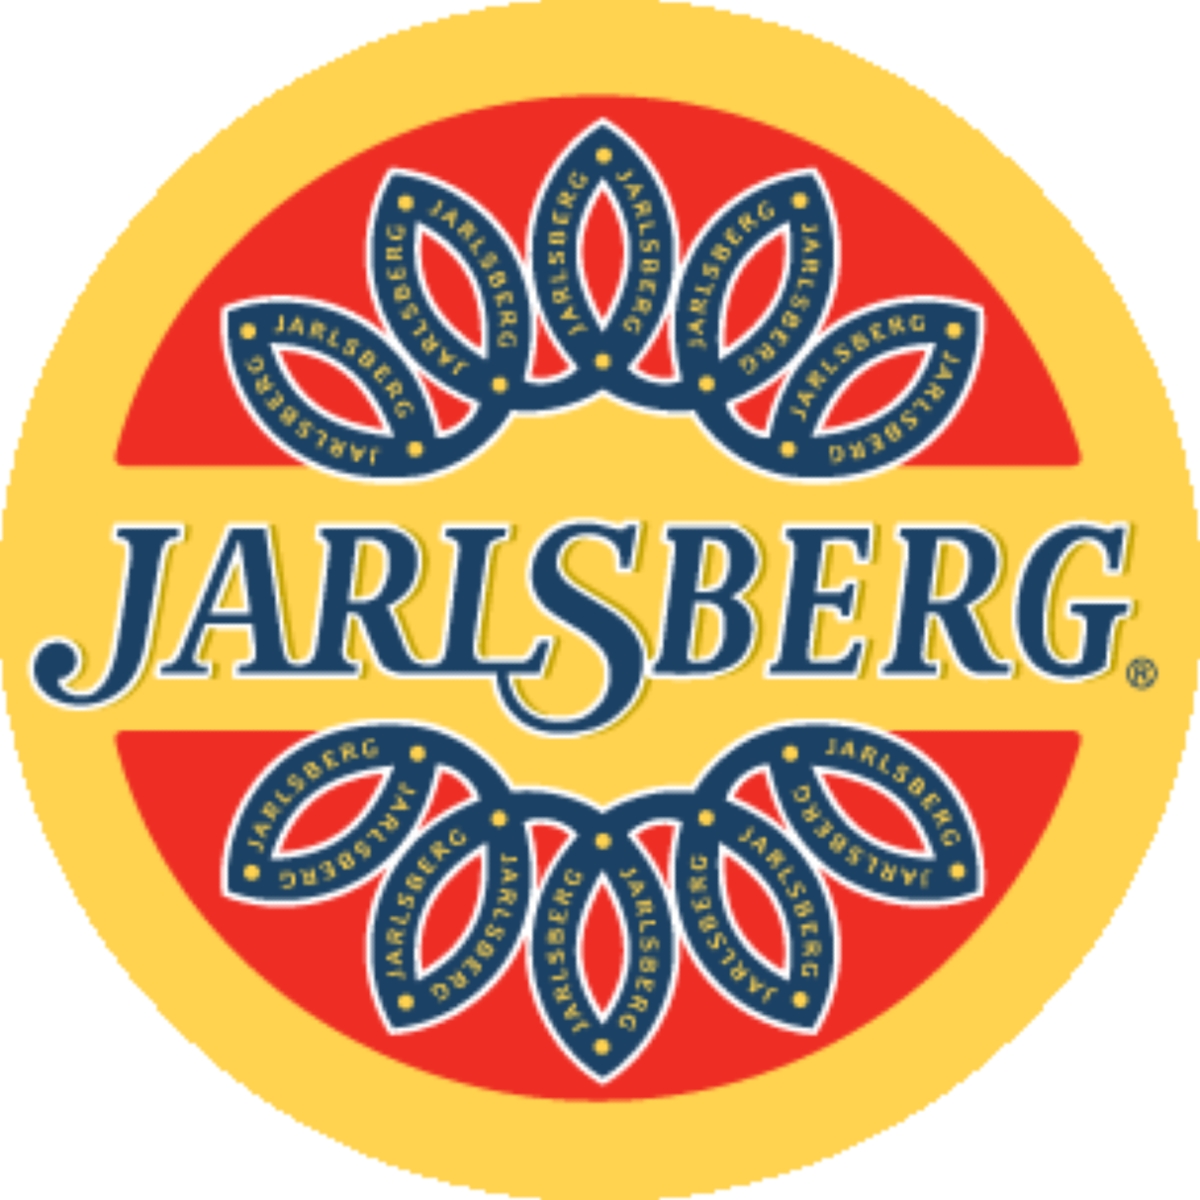 Jarlsberg logo